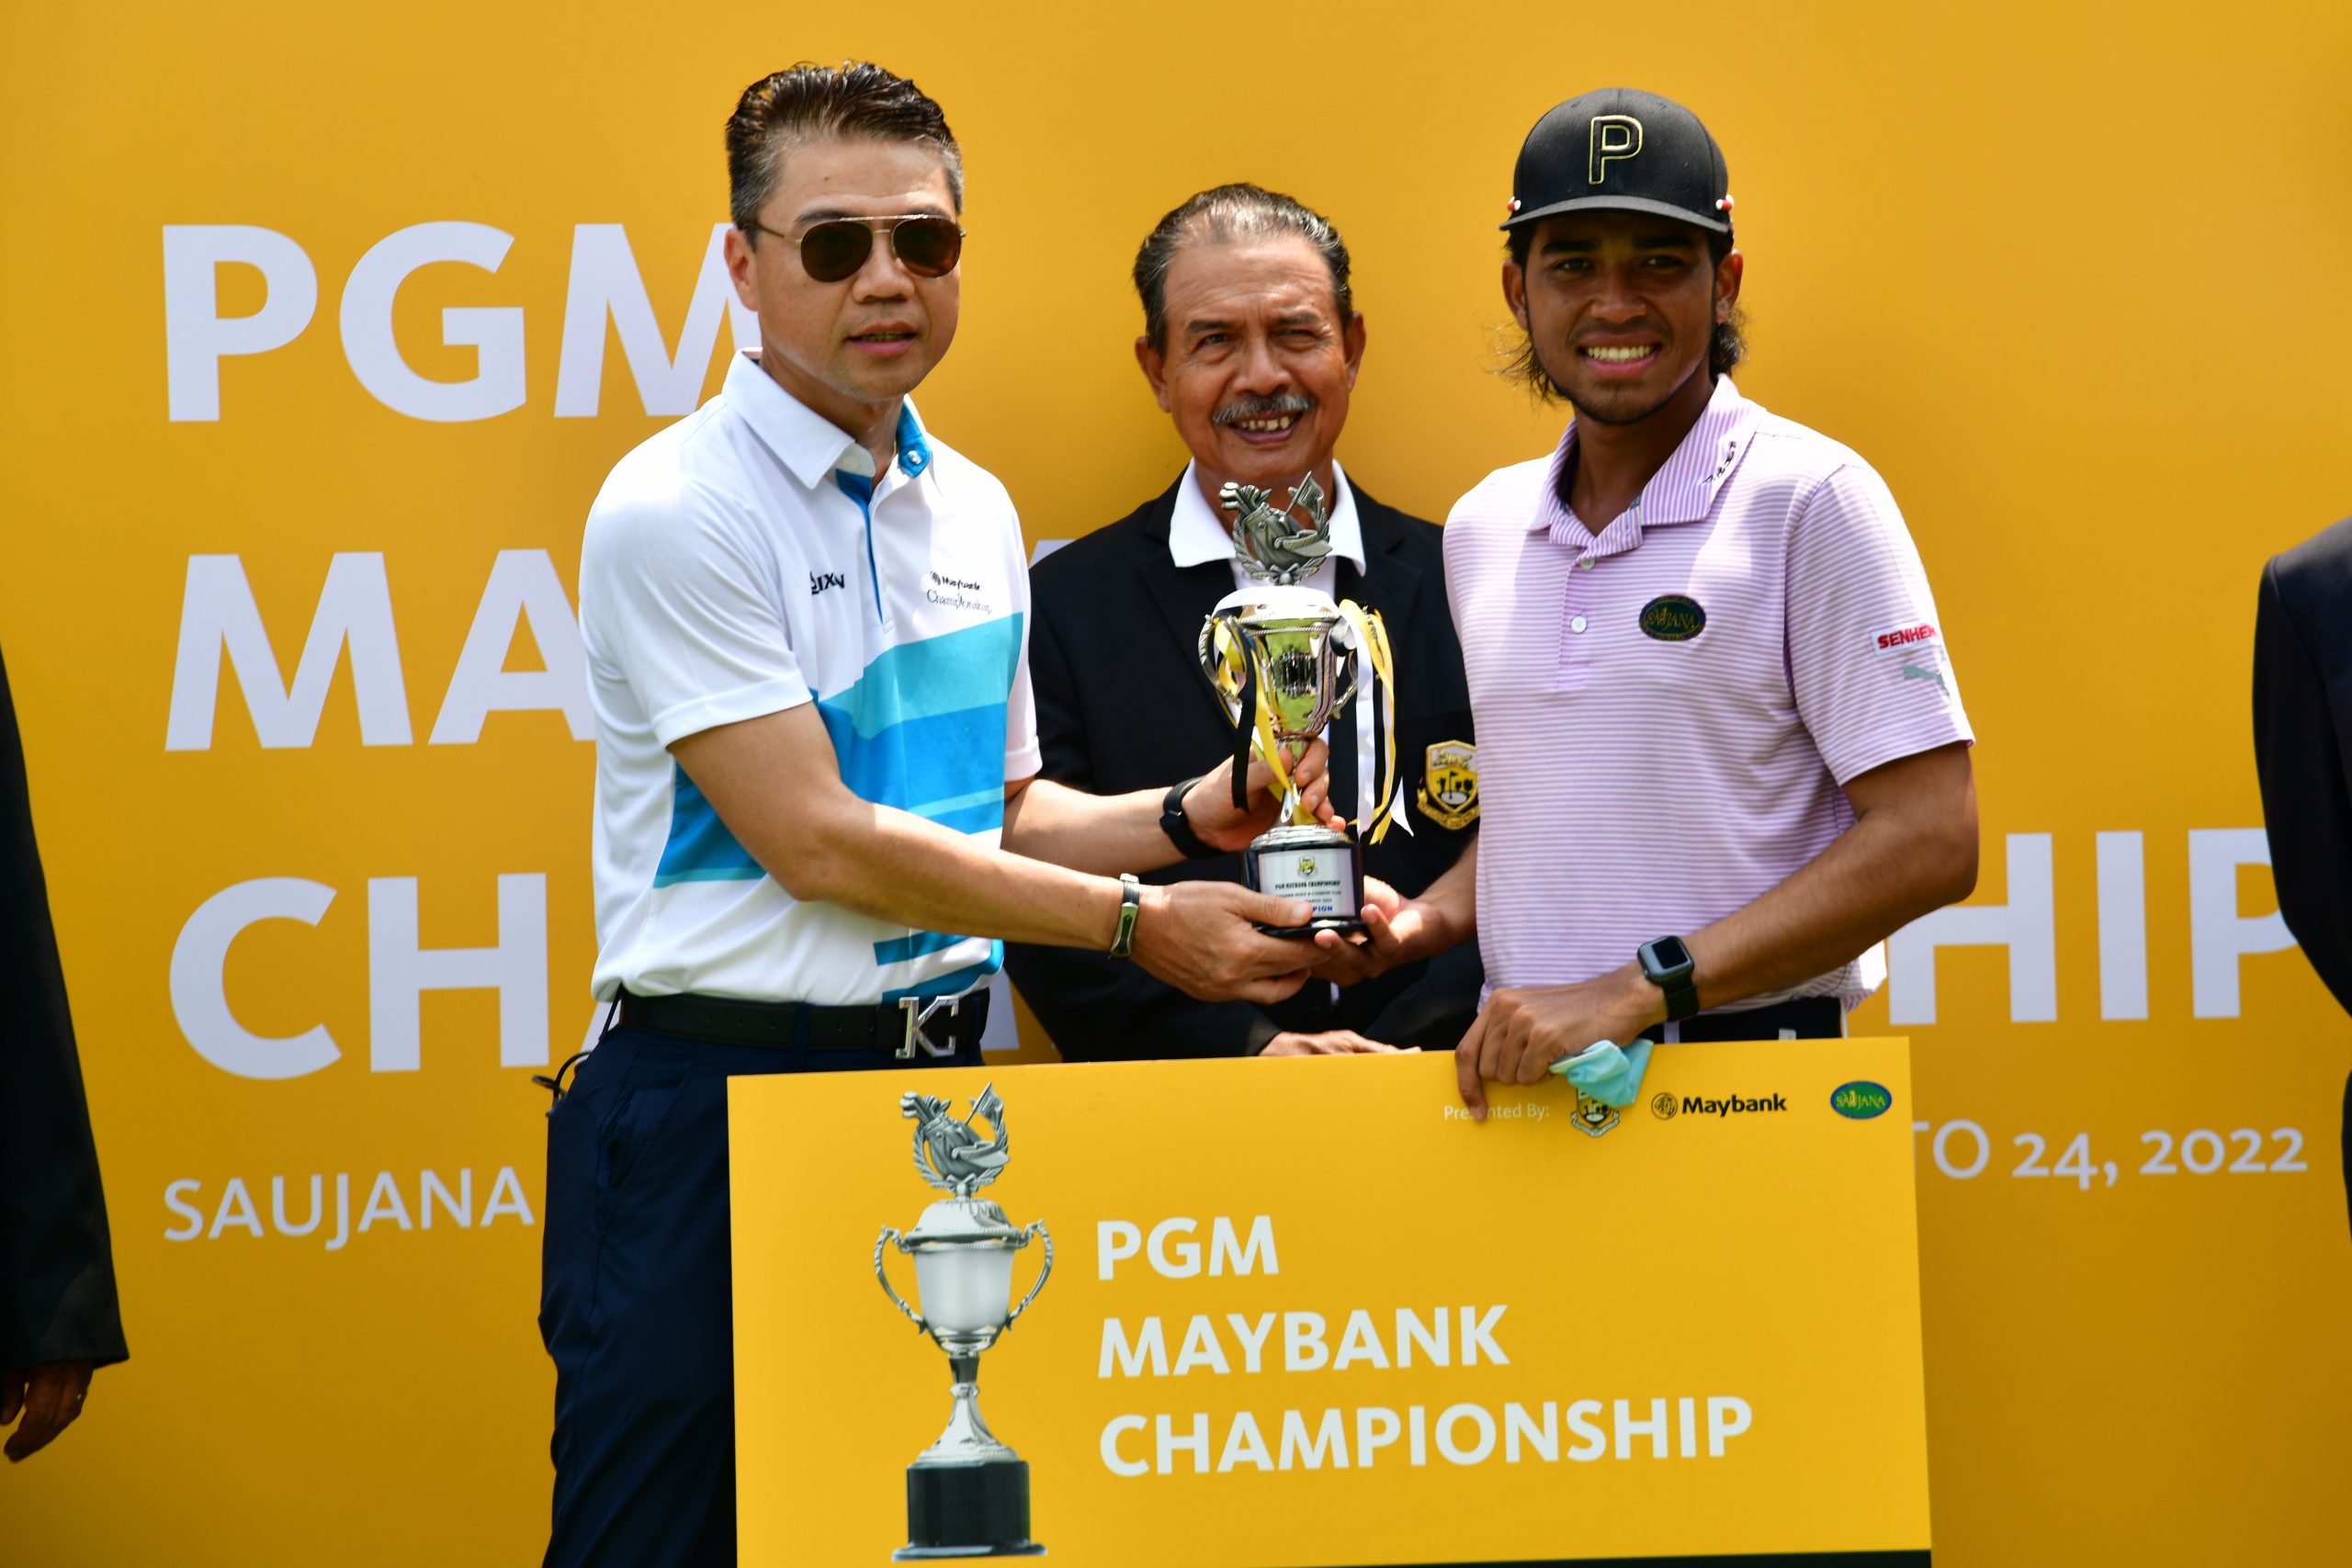 Shahriffuddin and Mirabel win the PGM Maybank Championship at Saujana